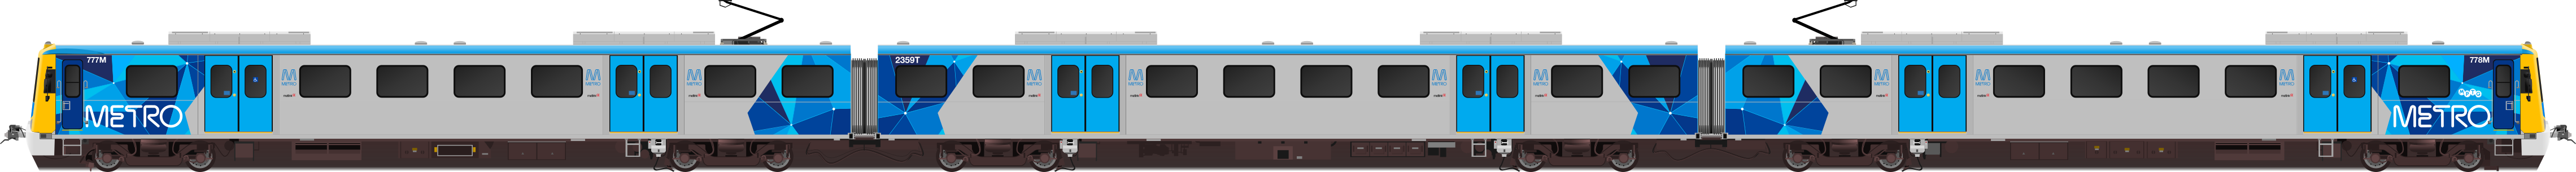 Siemens Nexas (Metro)